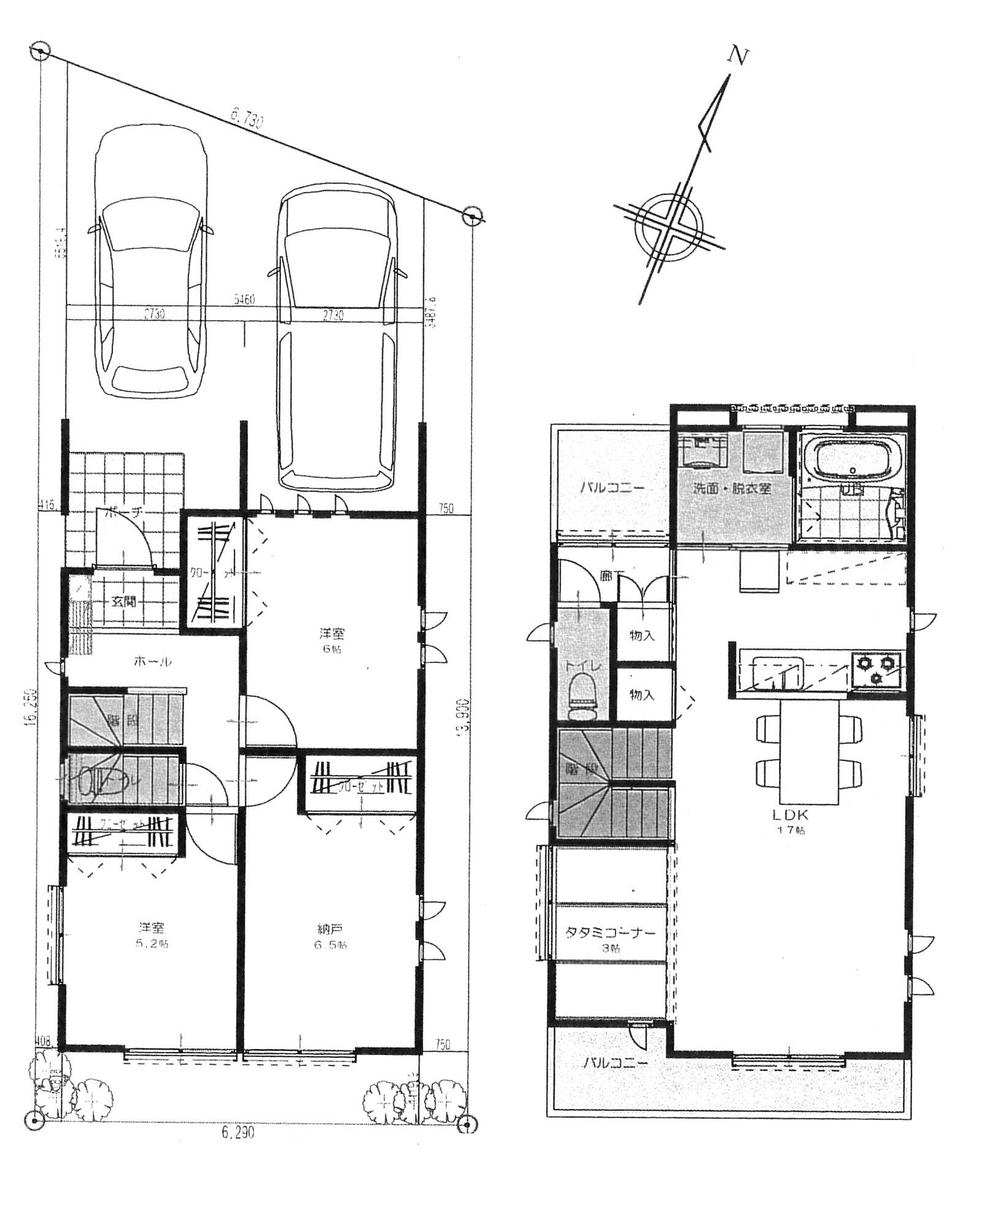 Building plan example (floor plan). Building plan Example (1) 3LDK, Land price 43,800,000 yen, Land area 95 sq m , Building price 15 million yen, Building area 91.08 sq m